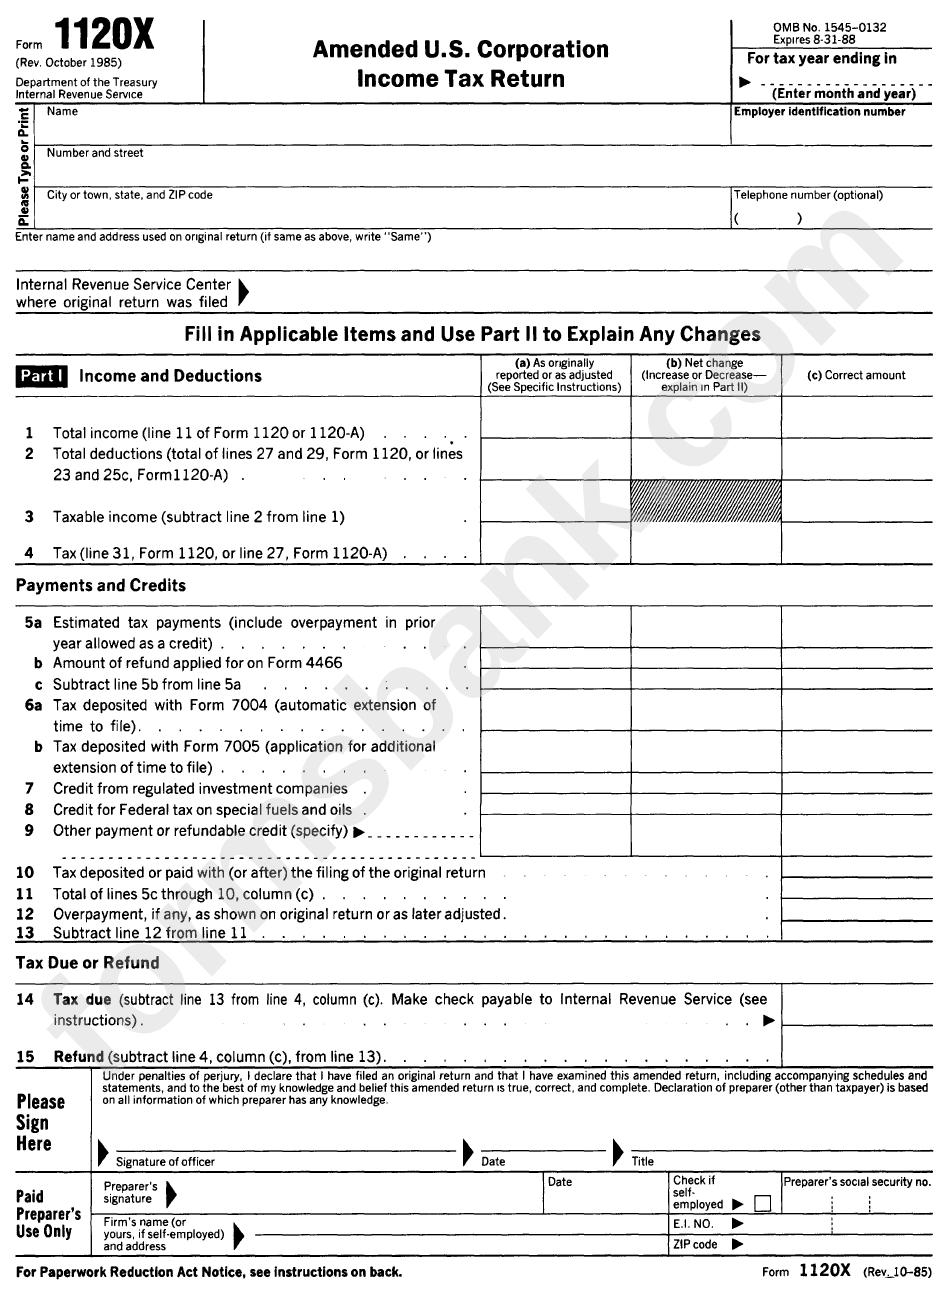 form-1120x-amended-u-s-corporation-income-tax-return-printable-pdf